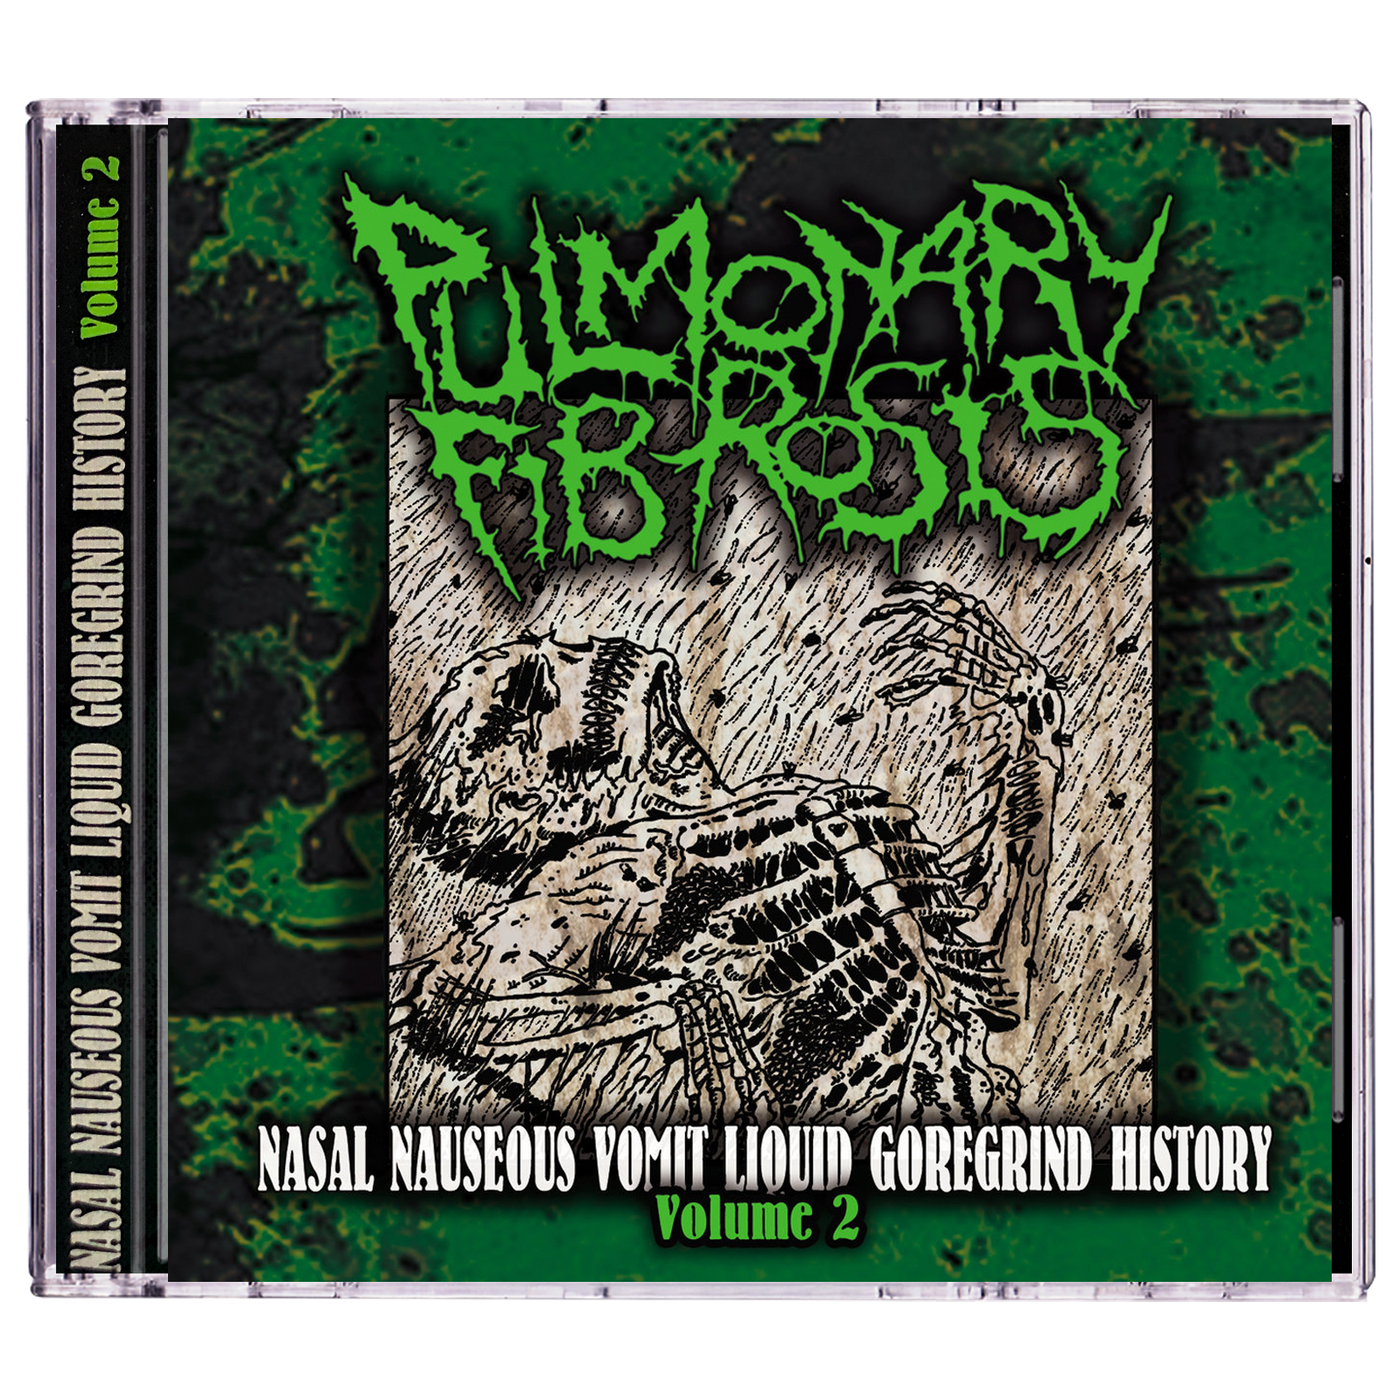 Pulmonary Fibrosis 'Nasal Nauseous Vomit Liquid Goregrind History Volume 2' CD